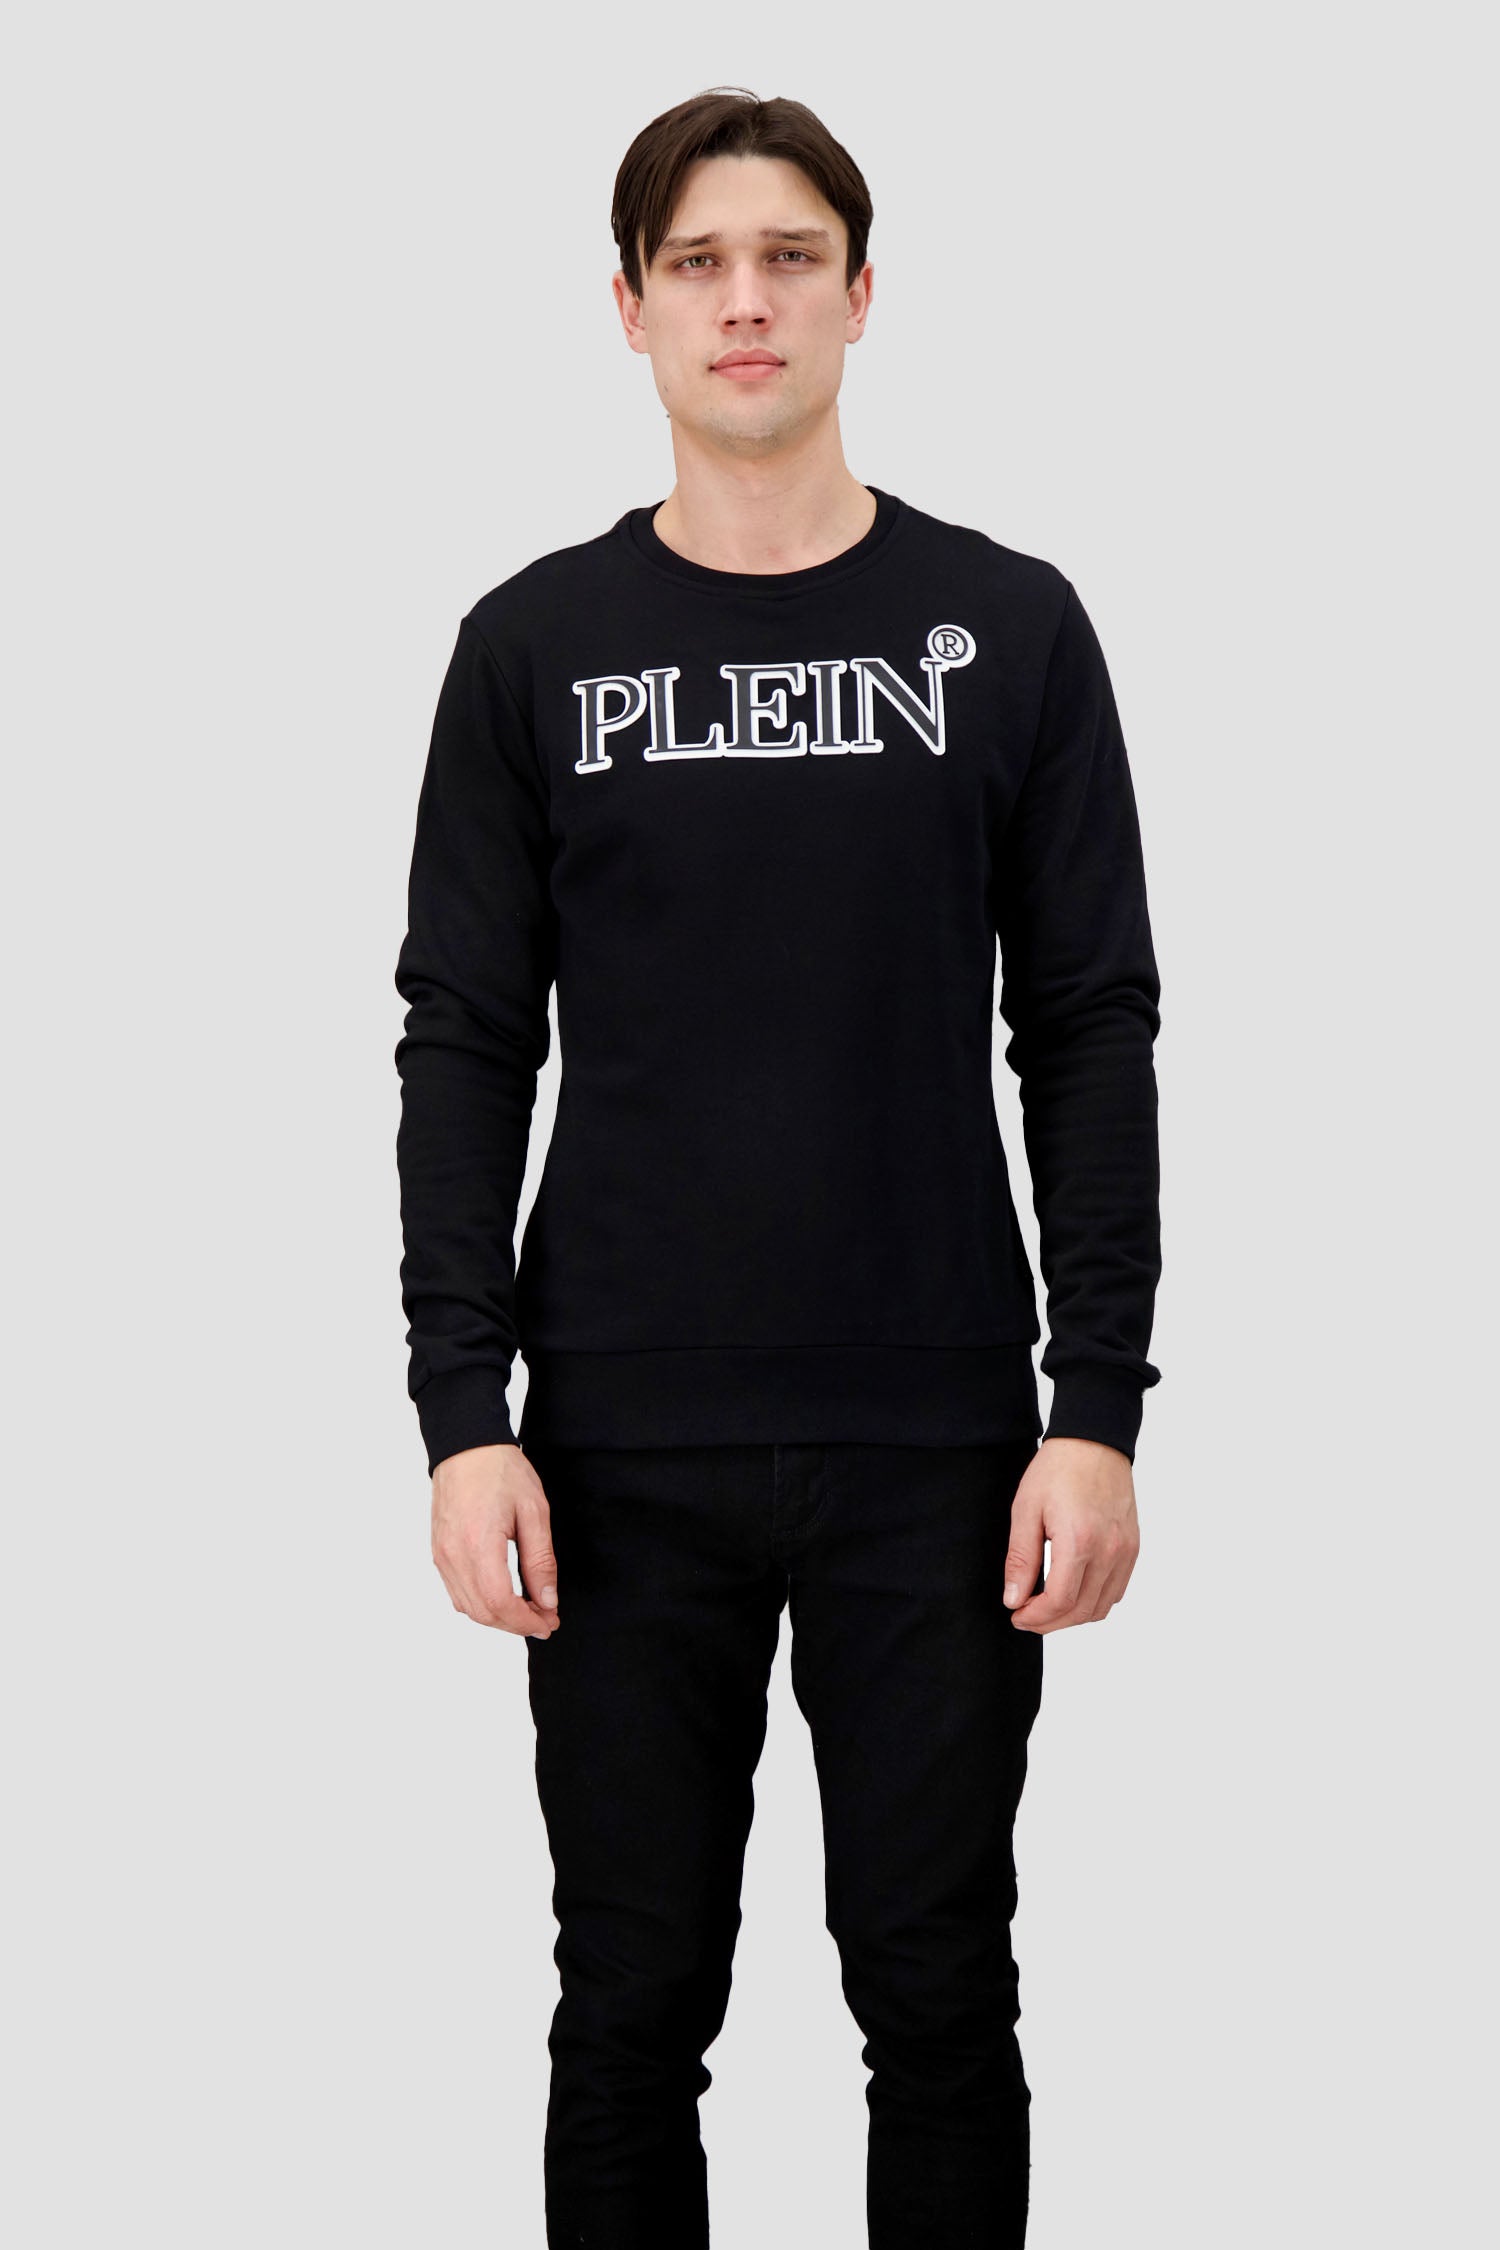 Philipp Plein  LS Black/White TM Sweatshirt